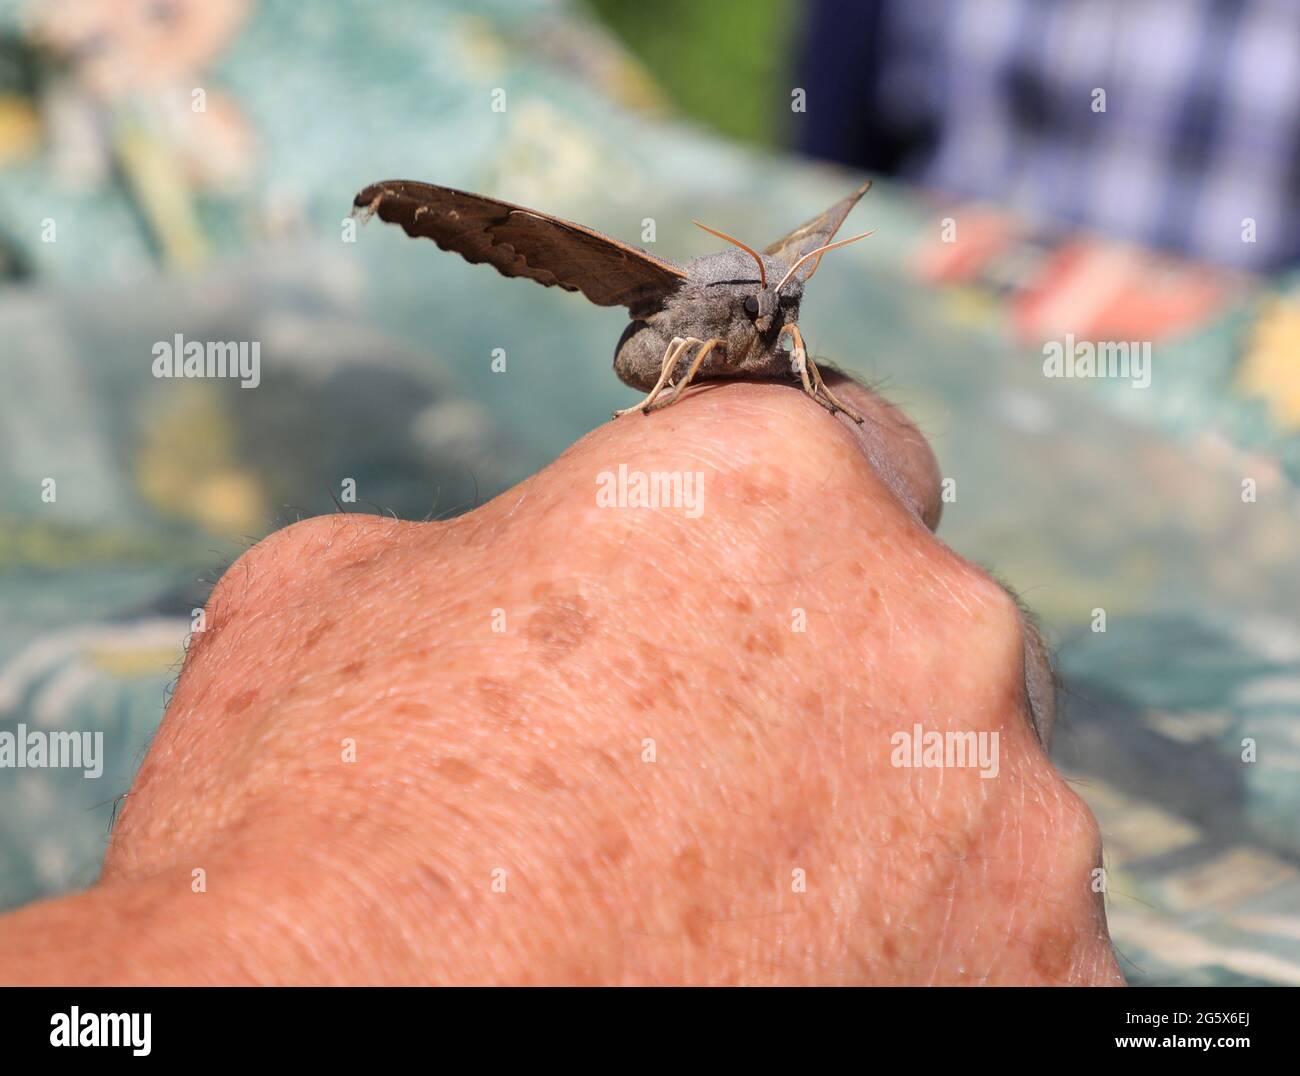 An Eyed hawk-moth (Smerinthus ocellatus) resting on a man's hand, Norfolk, England, UK Stock Photo